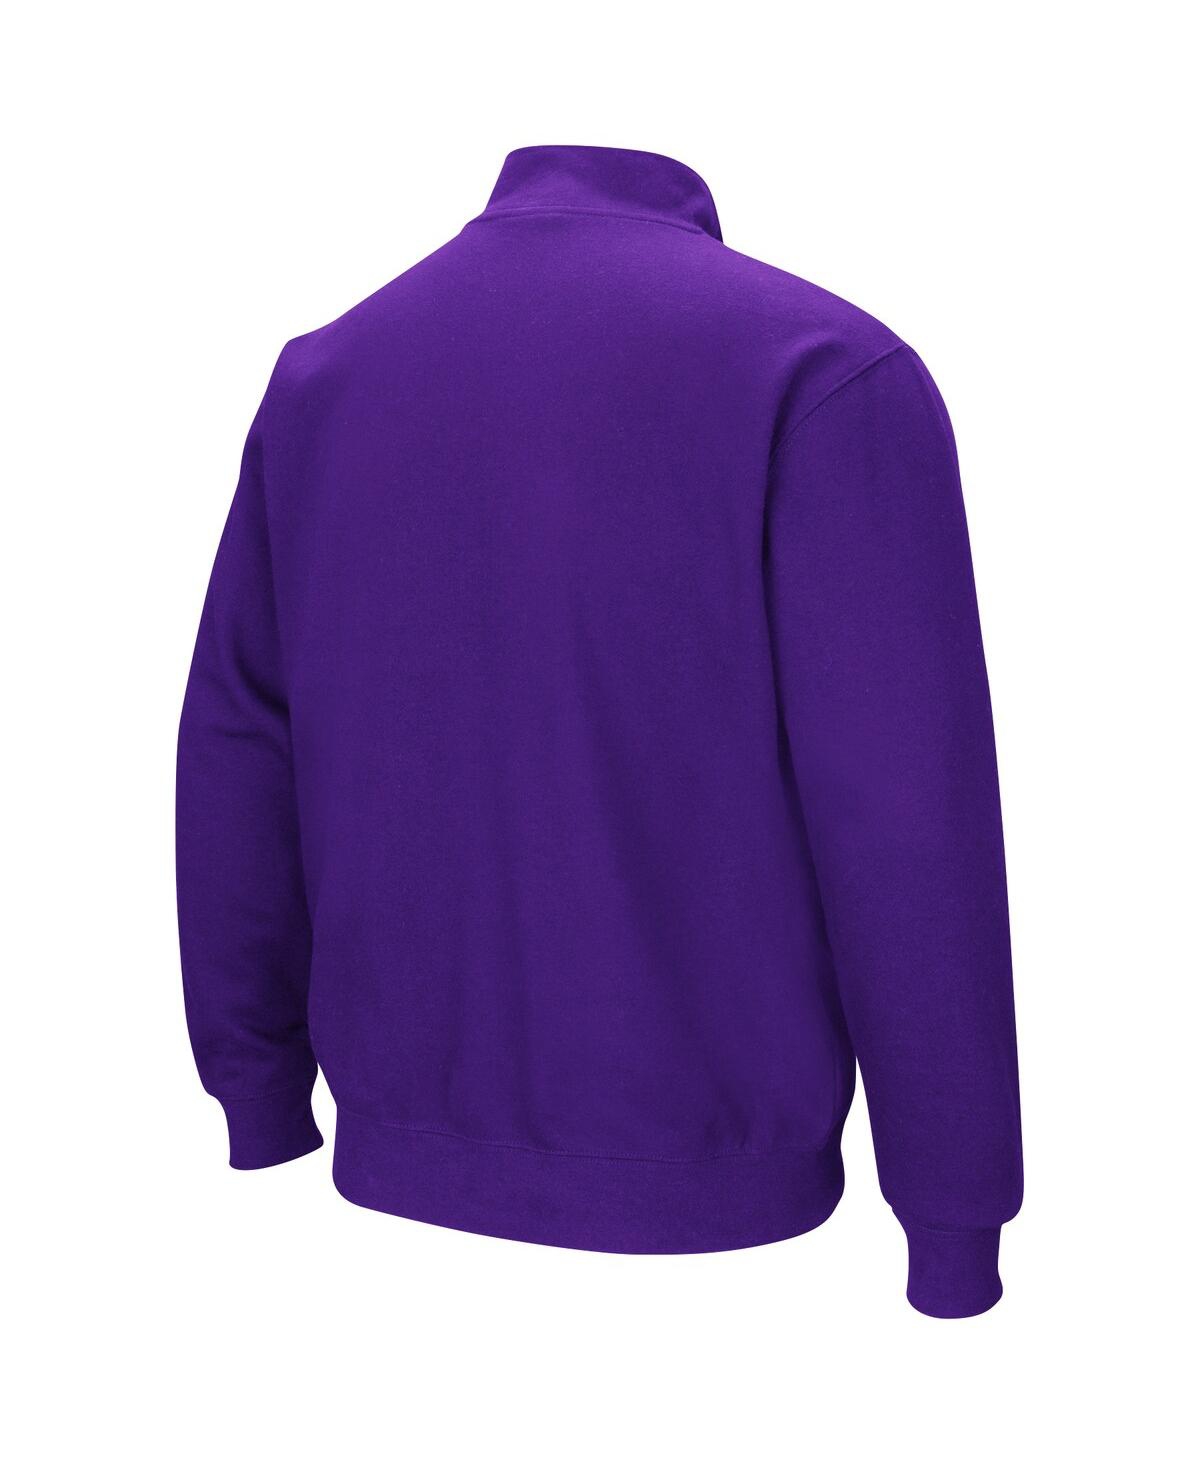 Shop Colosseum Men's  Purple Minnesota State University Mankato Tortugas Quarter-zip Sweatshirt